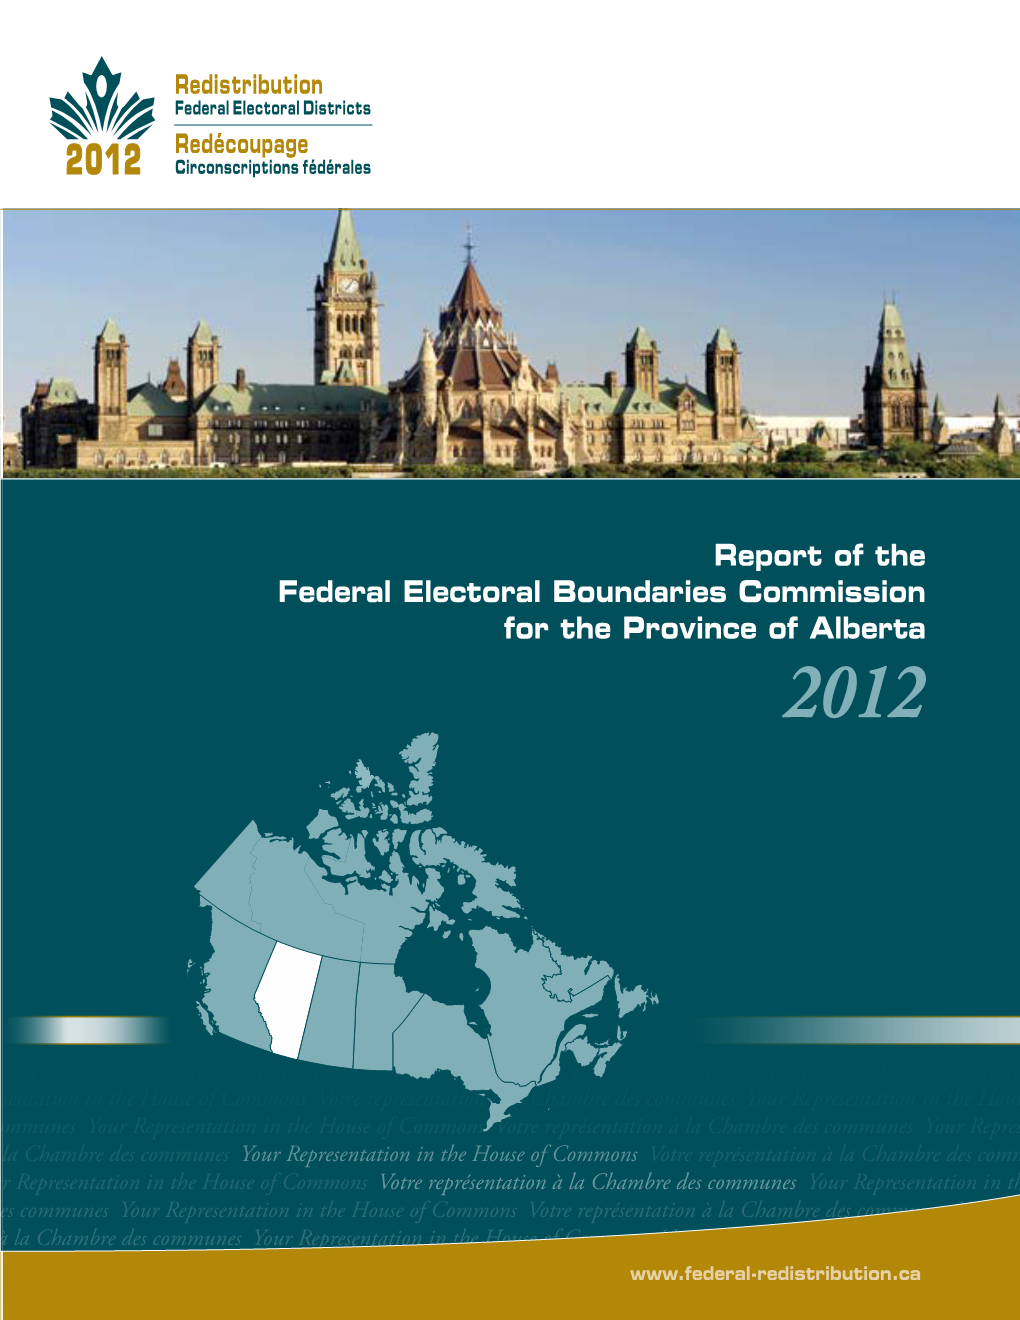 Commission's Report – Alberta